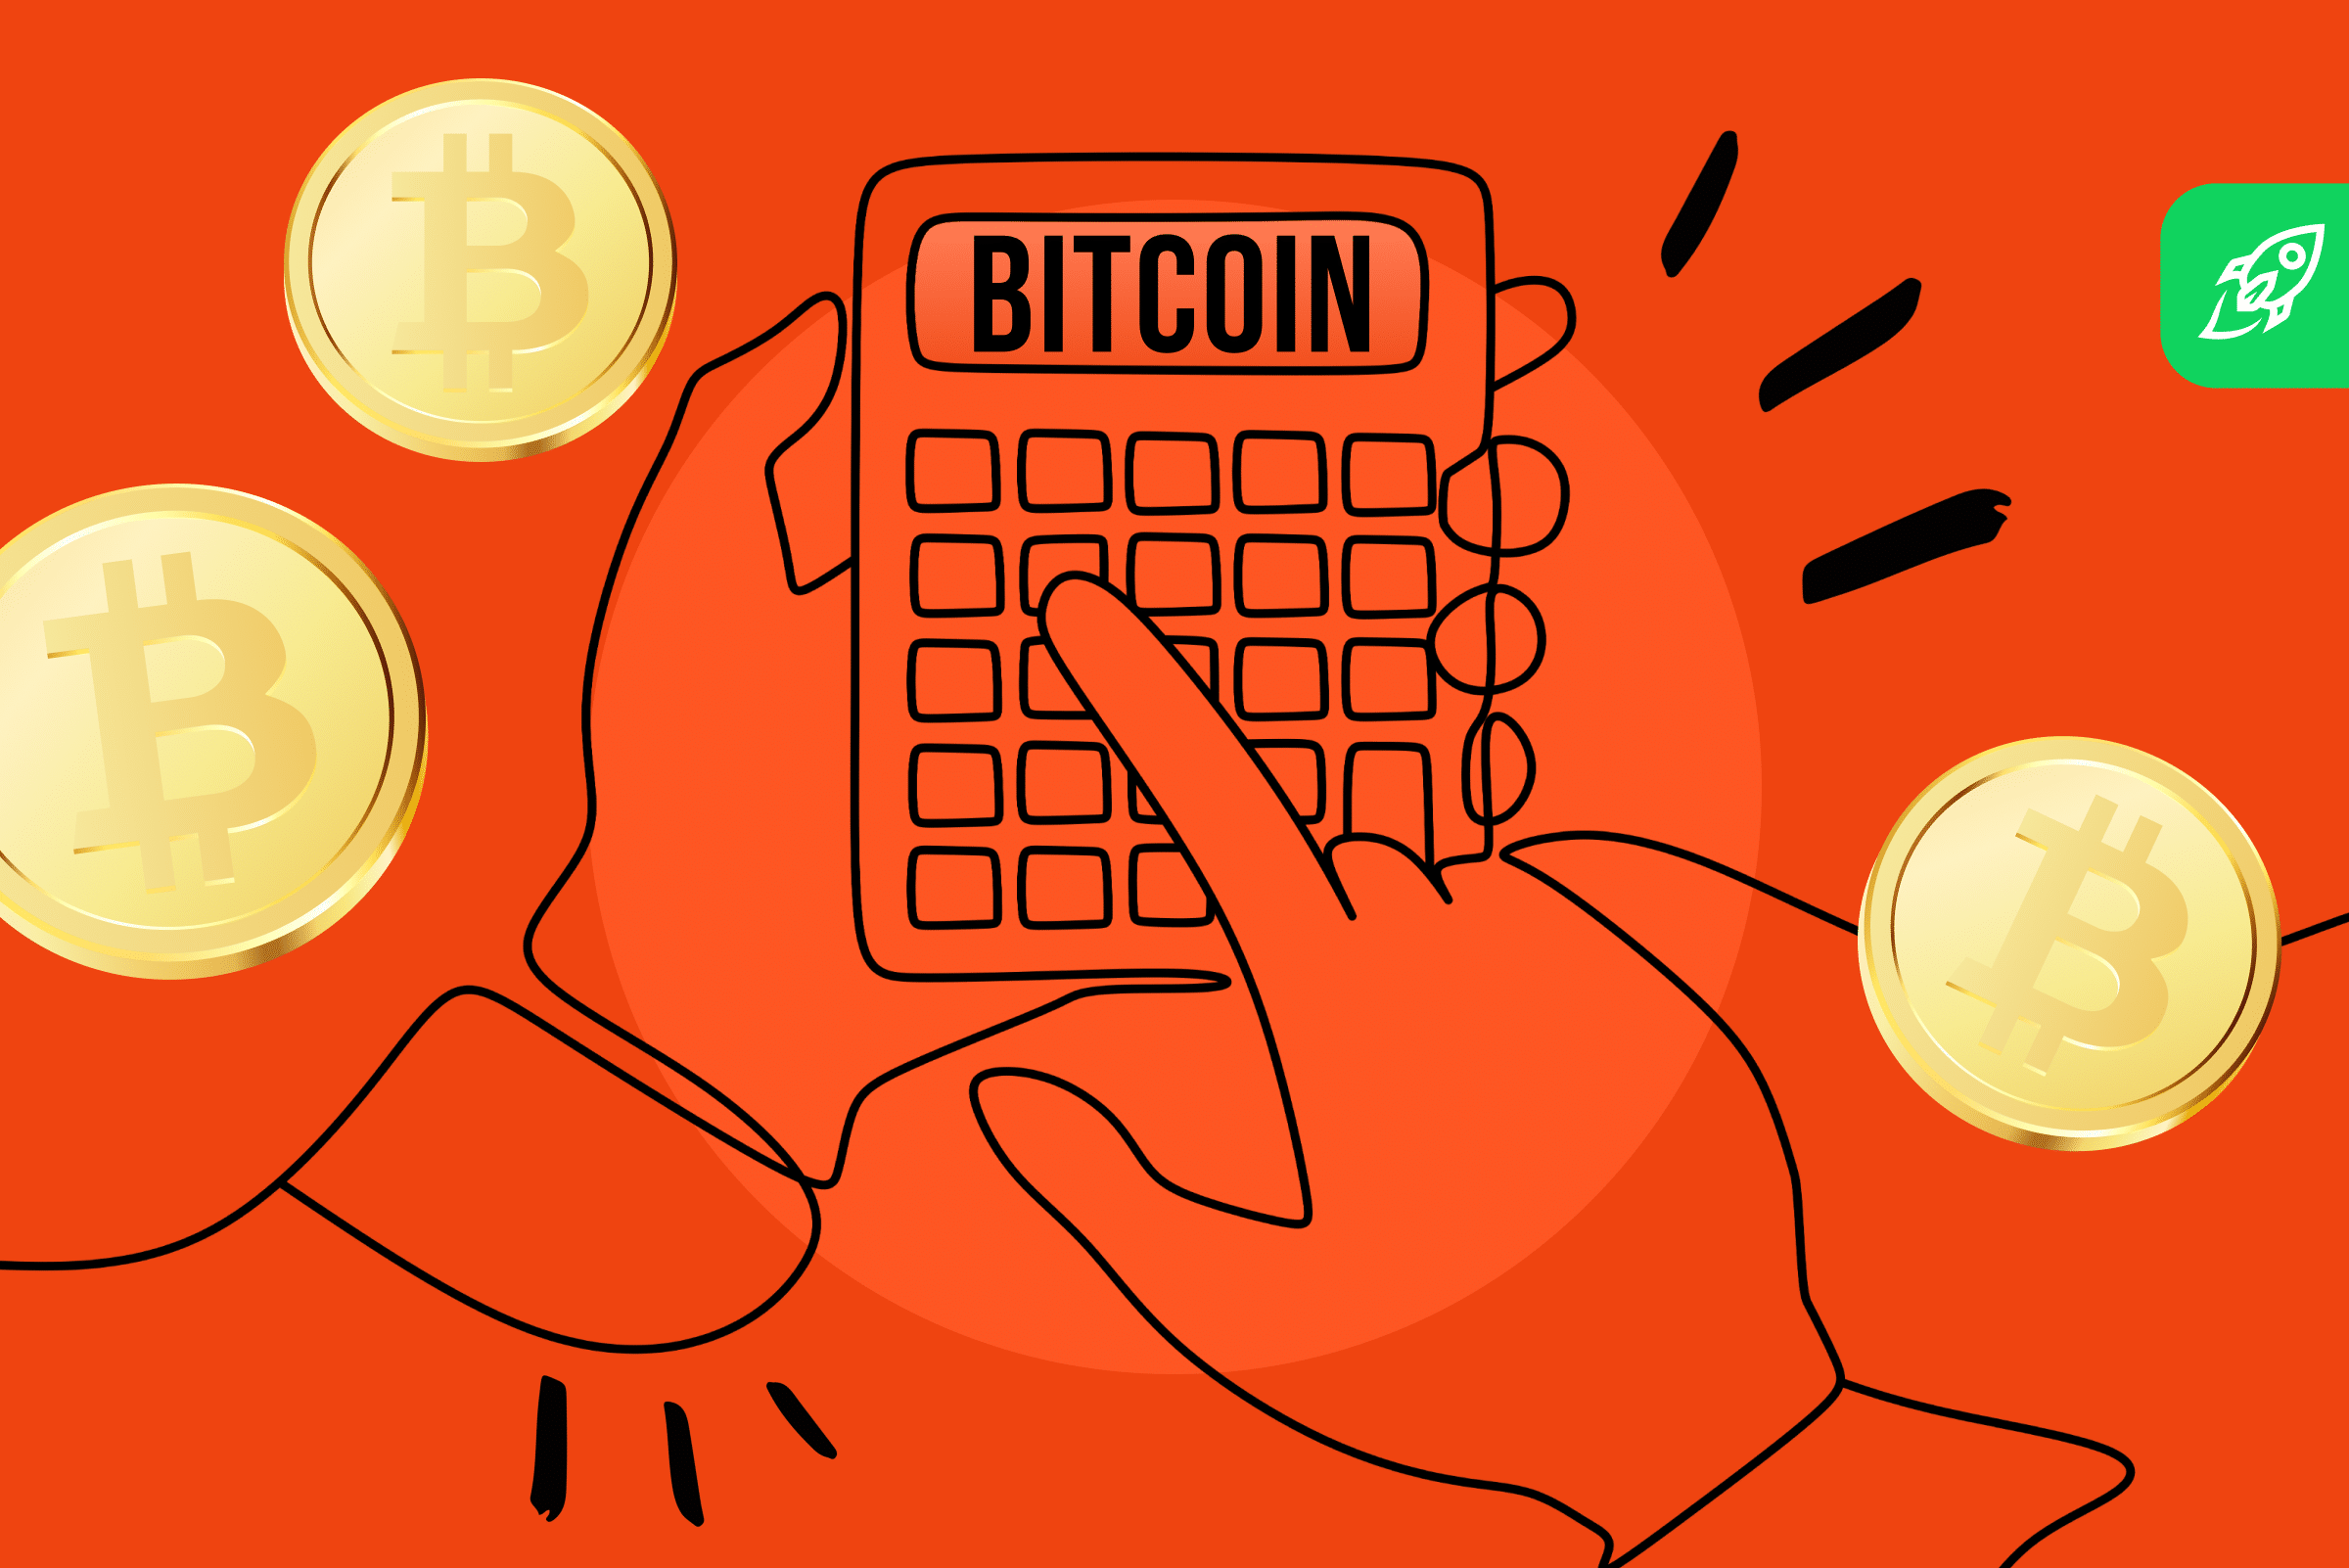 BitcoinCash (BCH) Mining Profit Calculator - WhatToMine